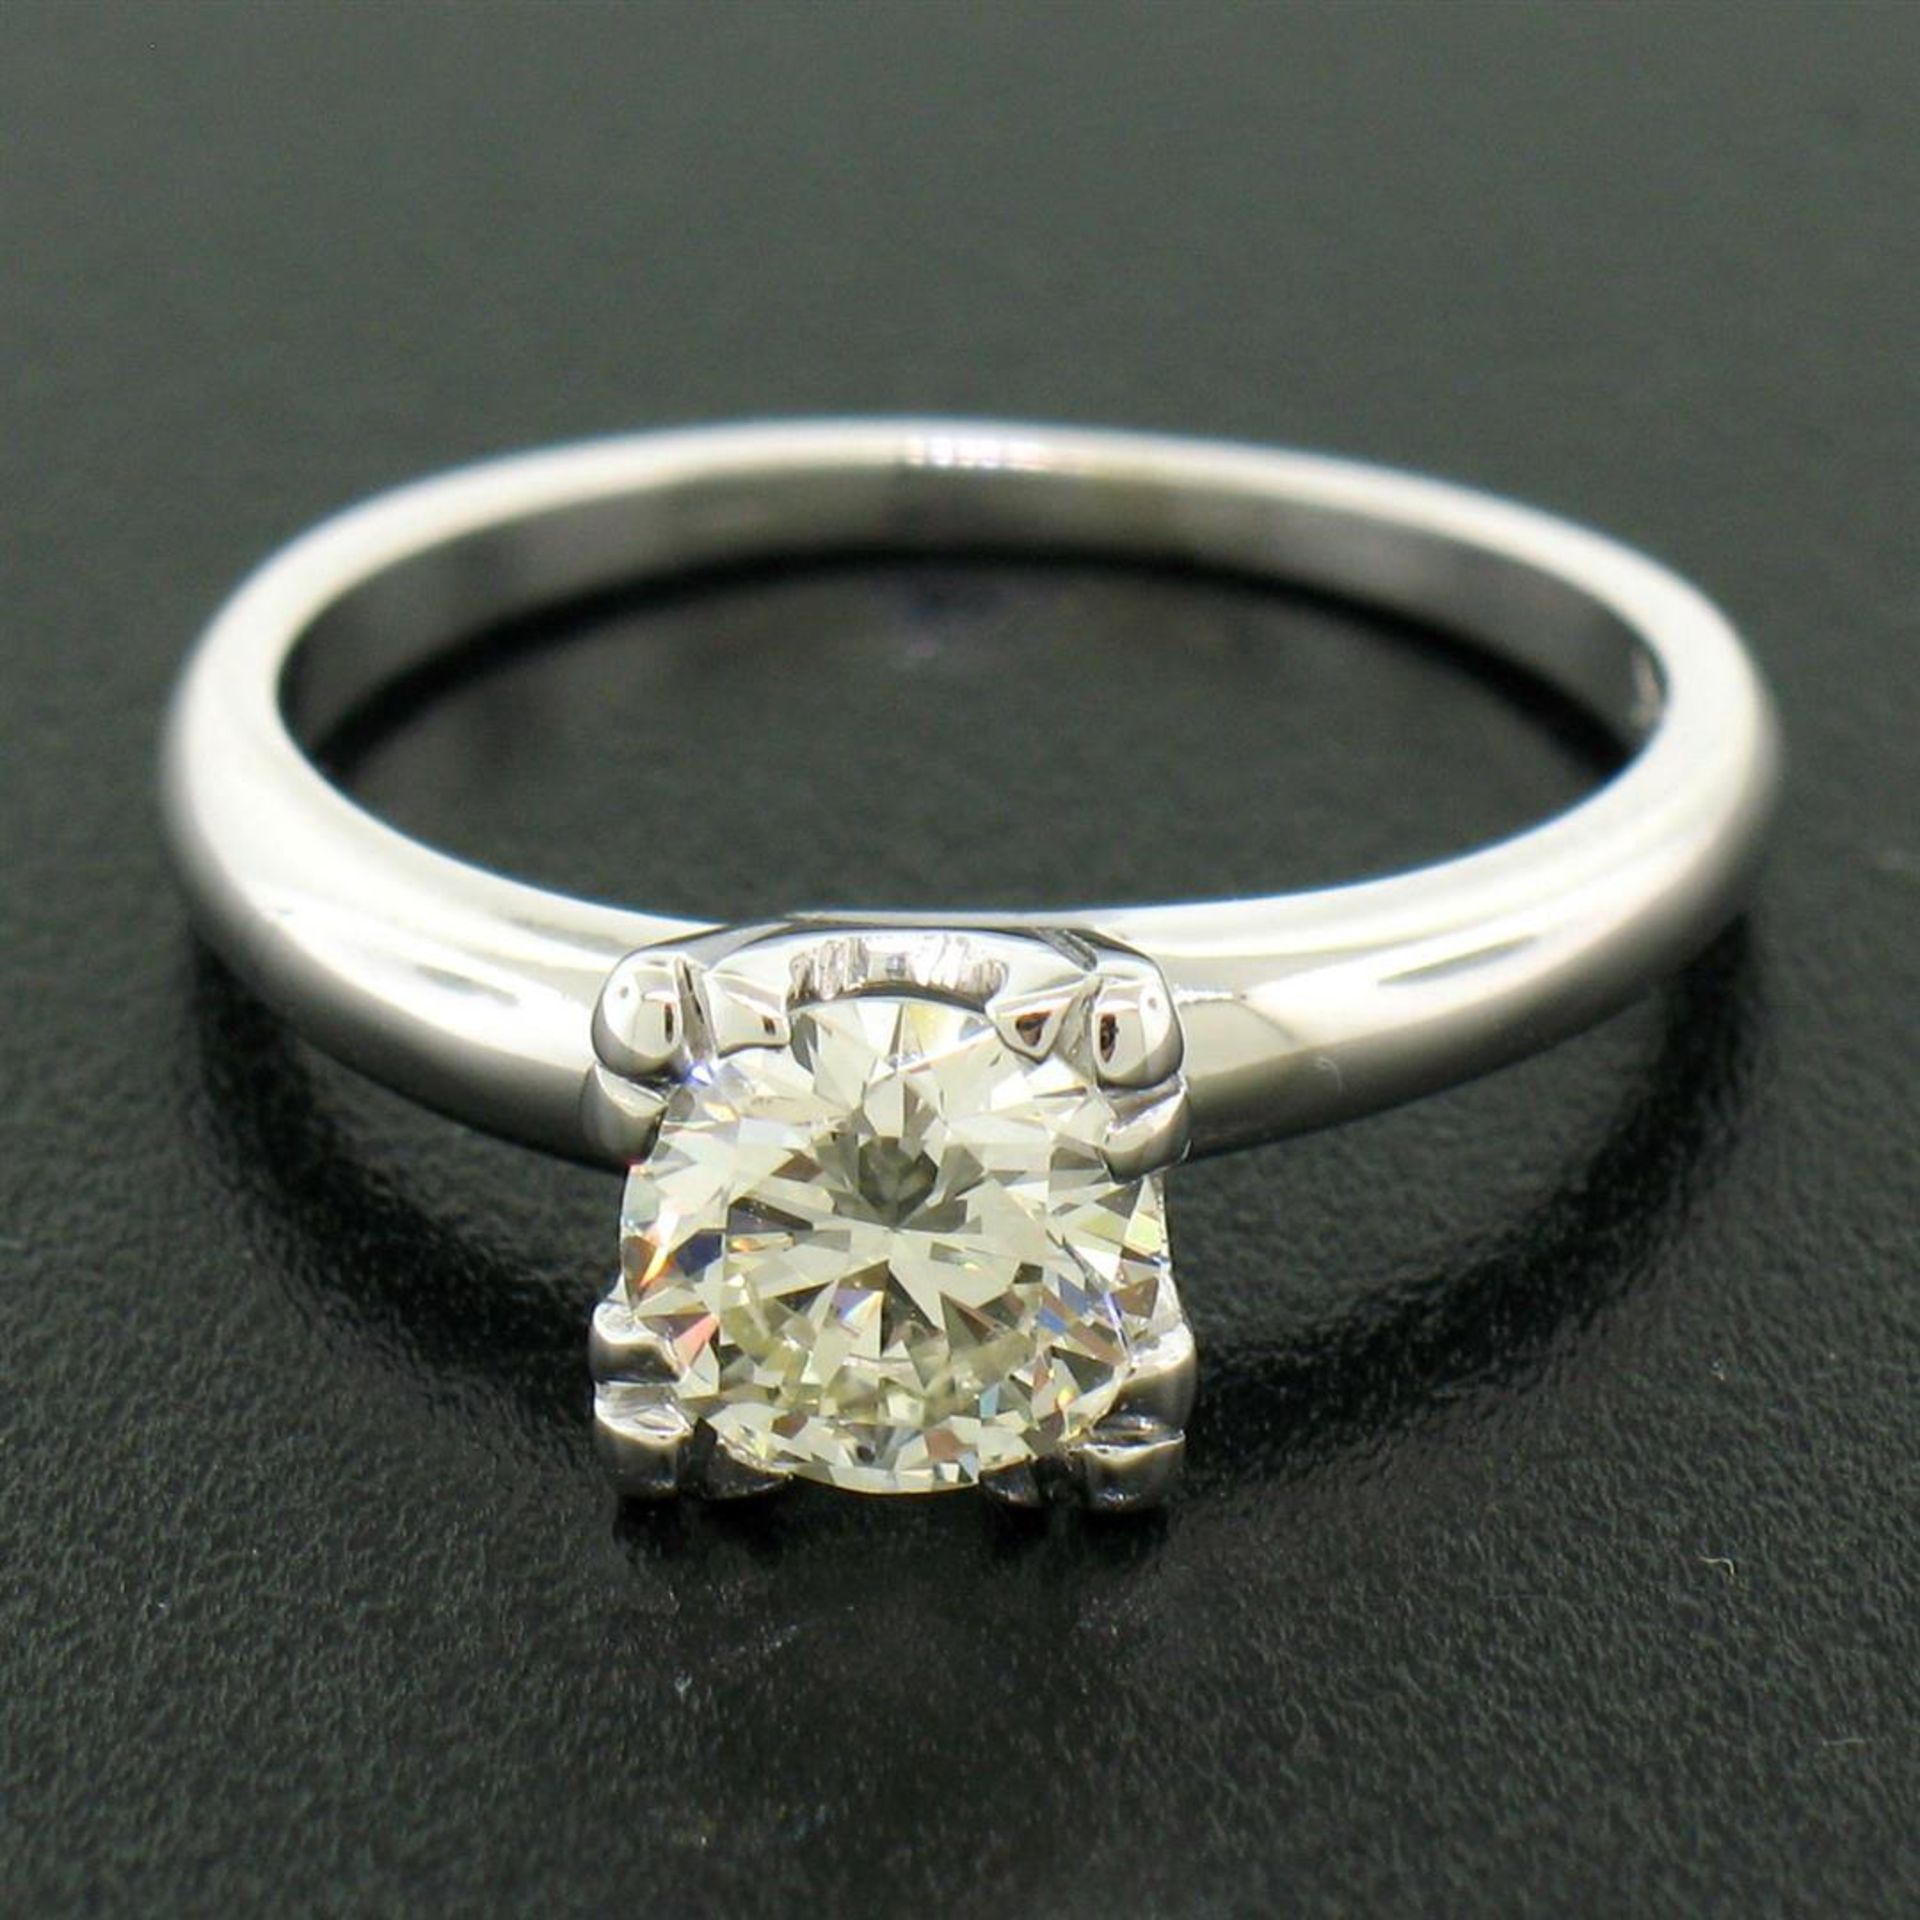 14k White Gold 0.83 ct I VVS2 Round Brilliant Cut Diamond Solitaire Ring - Image 2 of 7